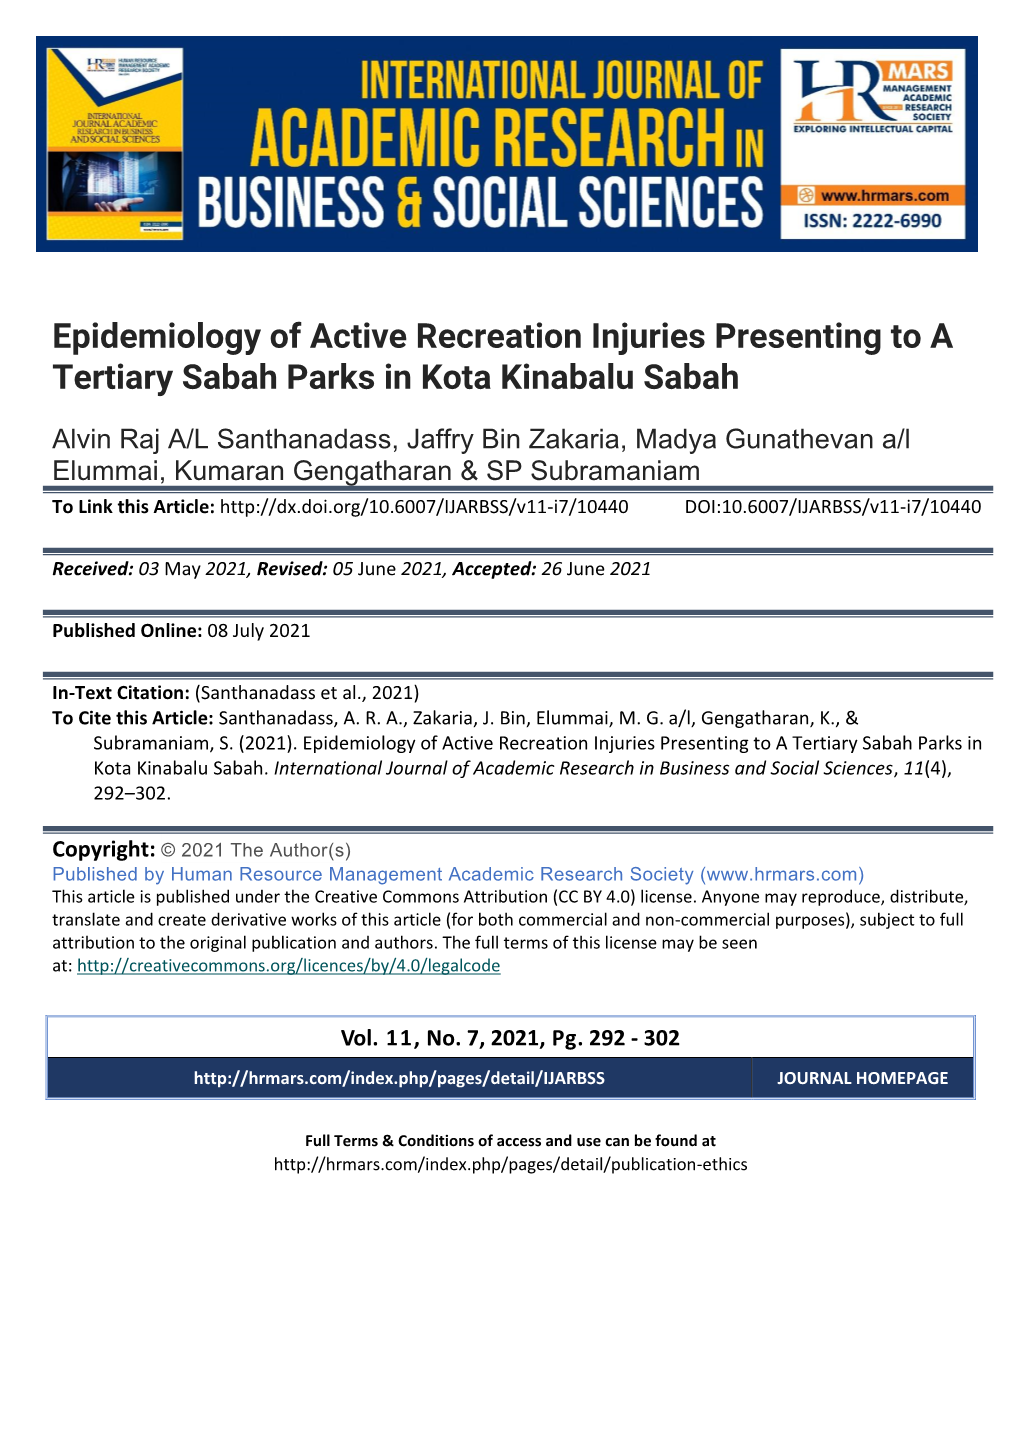 Epidemiology of Active Recreation Injuries Presenting to a Tertiary Sabah Parks in Kota Kinabalu Sabah